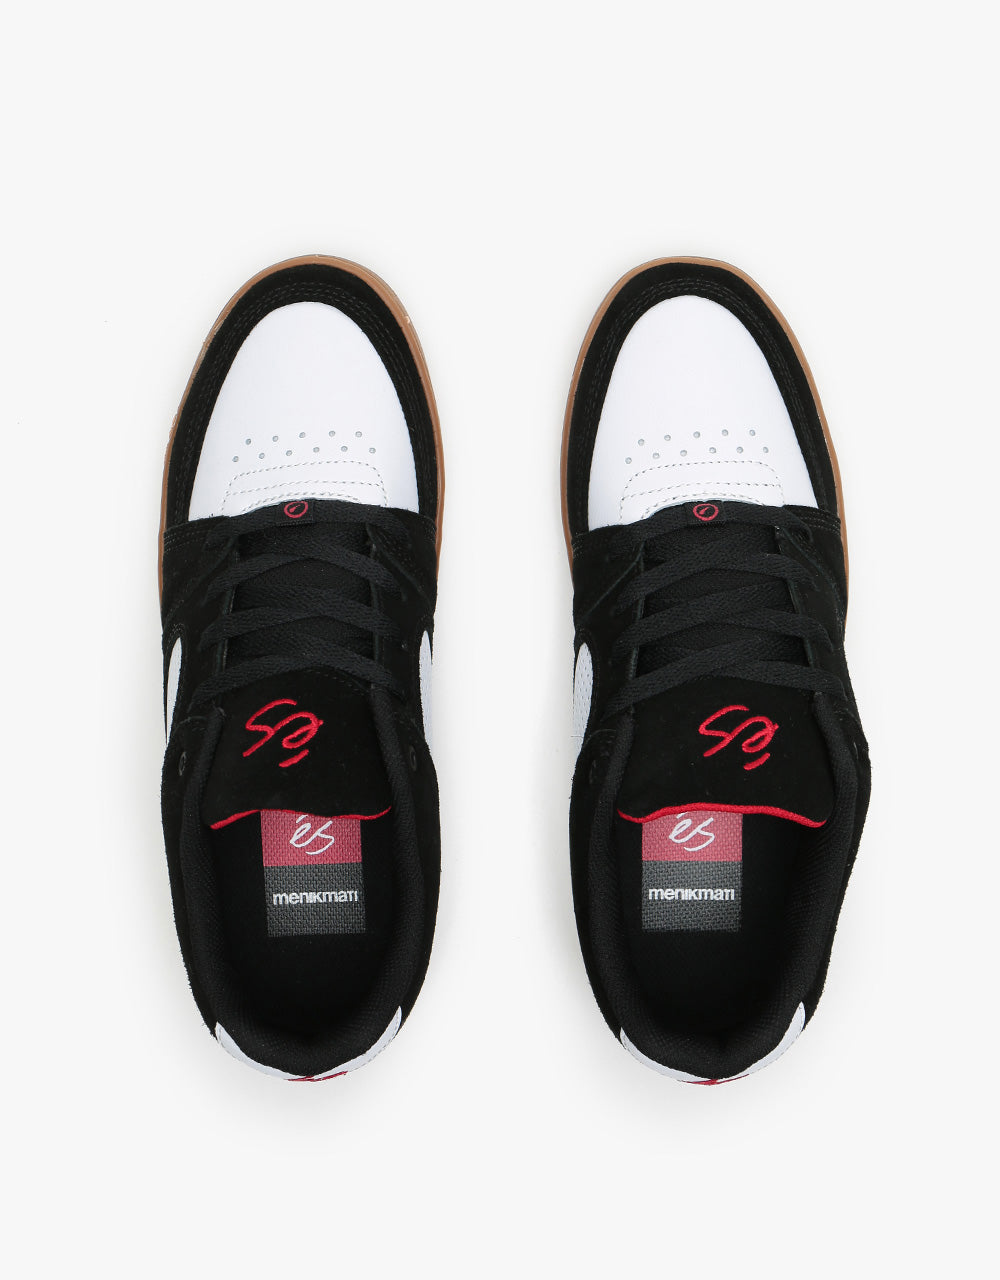 éS x Menikmati Accel Slim Skate Shoes - Black/White/Gum